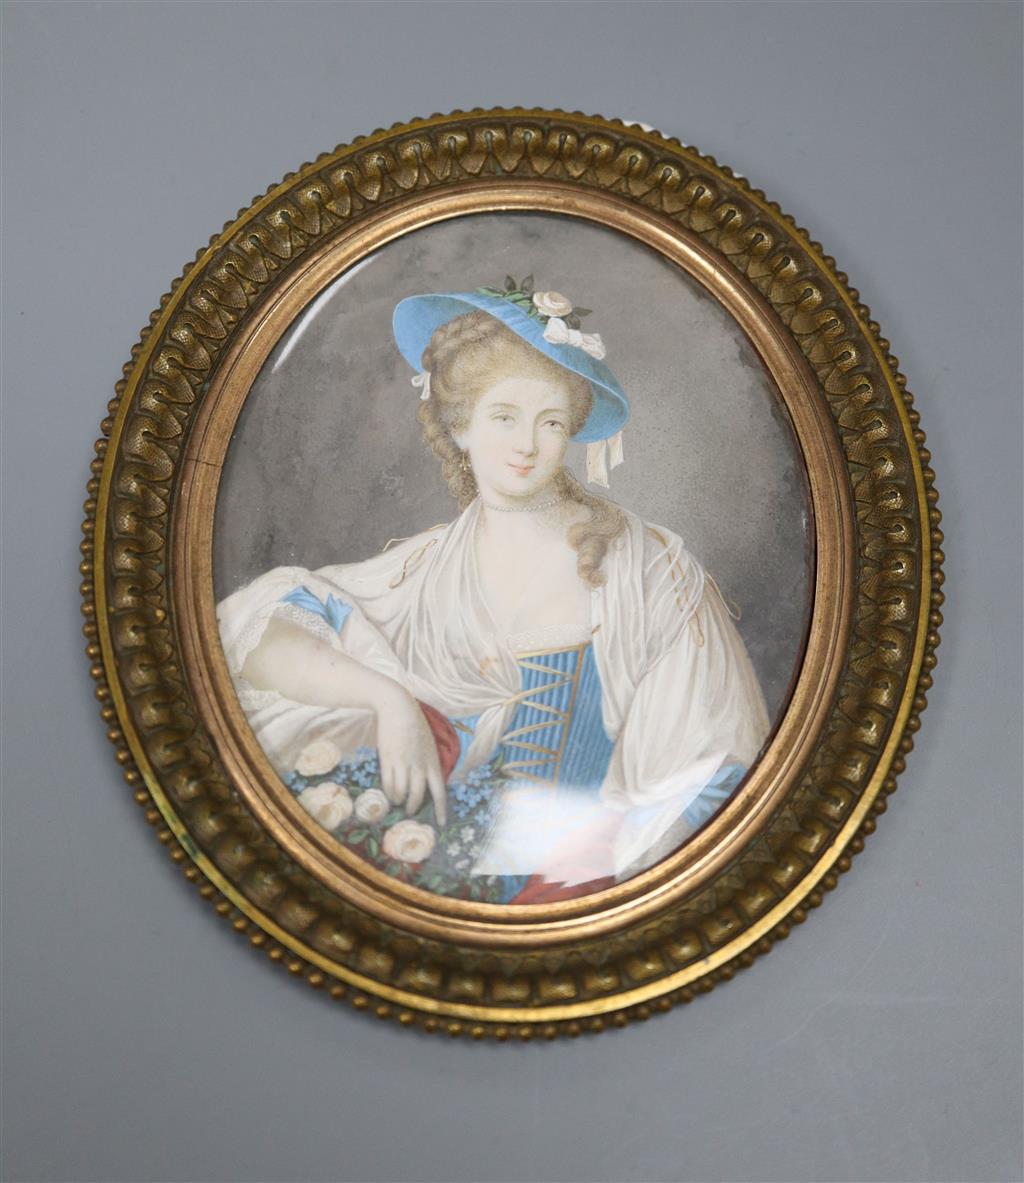 A 19th century oval portrait miniature of a lady on ivory, ormolu frame